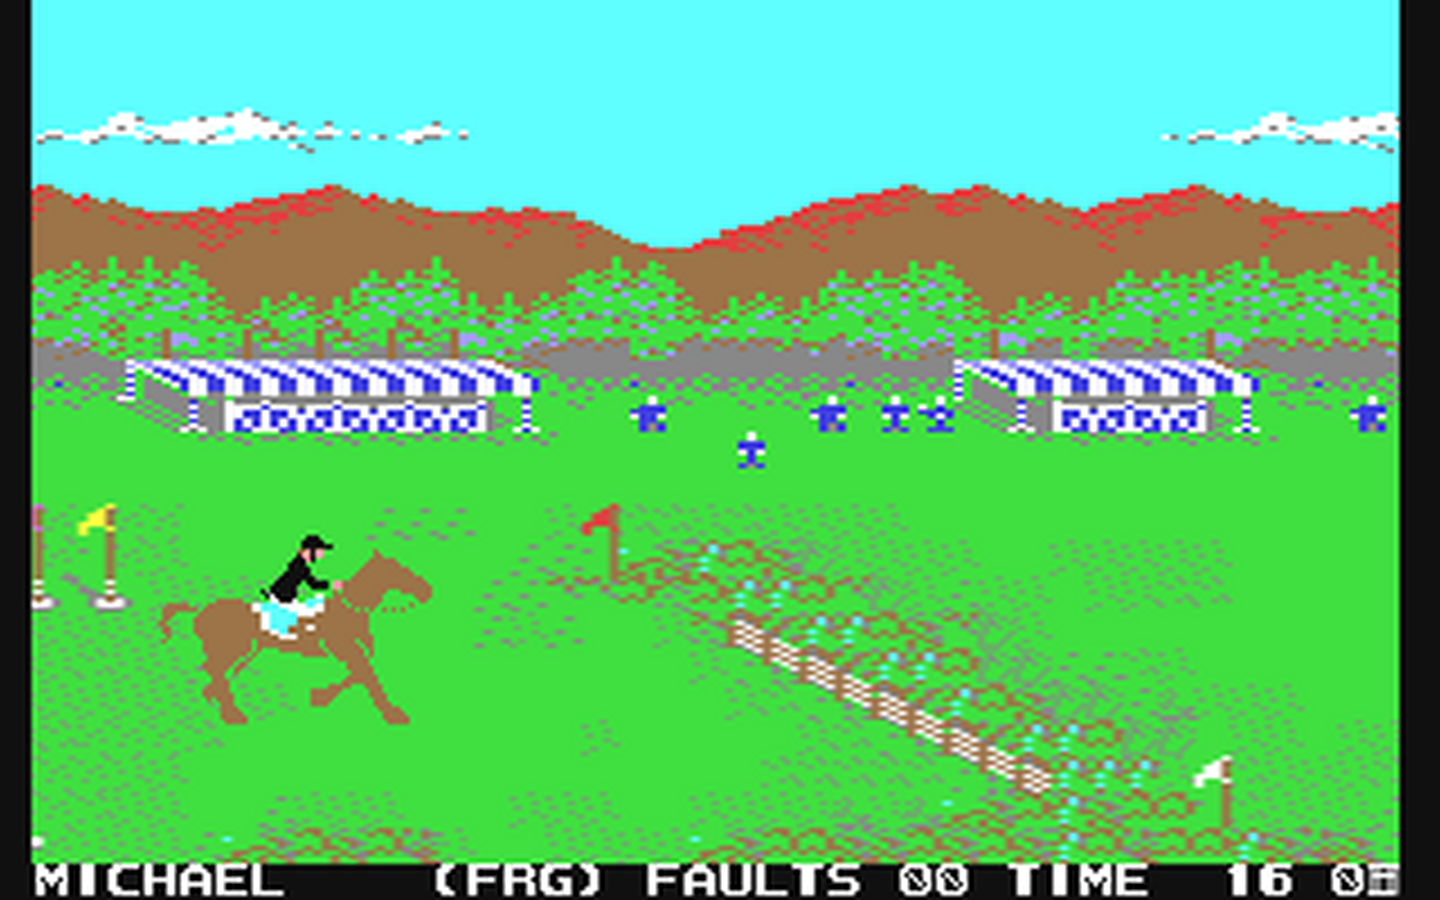 C64 GameBase Summer_Games_II Epyx 1985